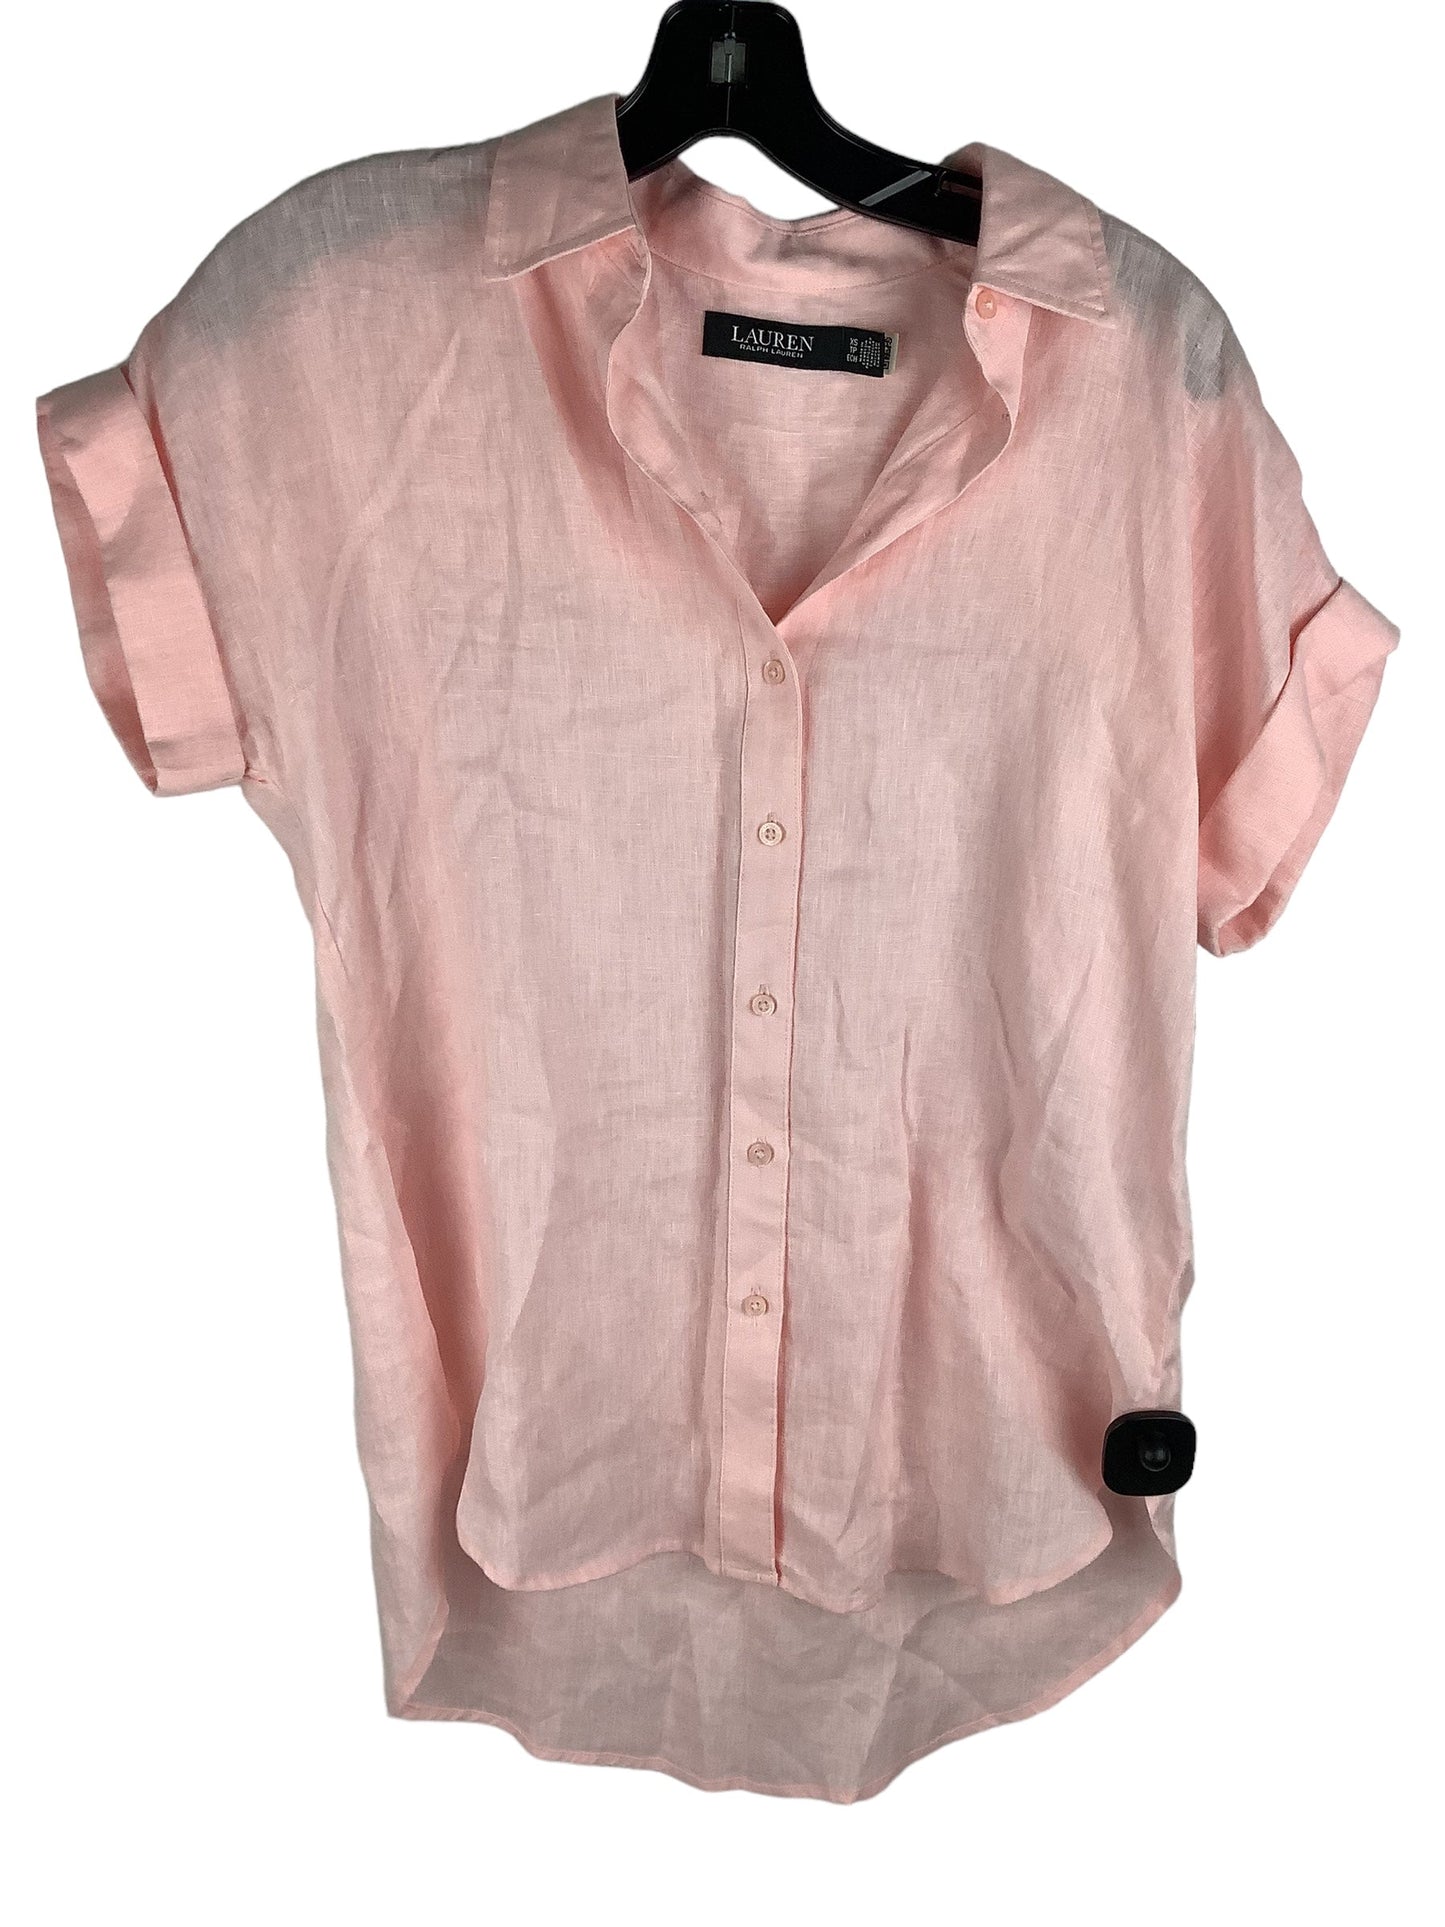 Pink Top Short Sleeve Ralph Lauren, Size Xs